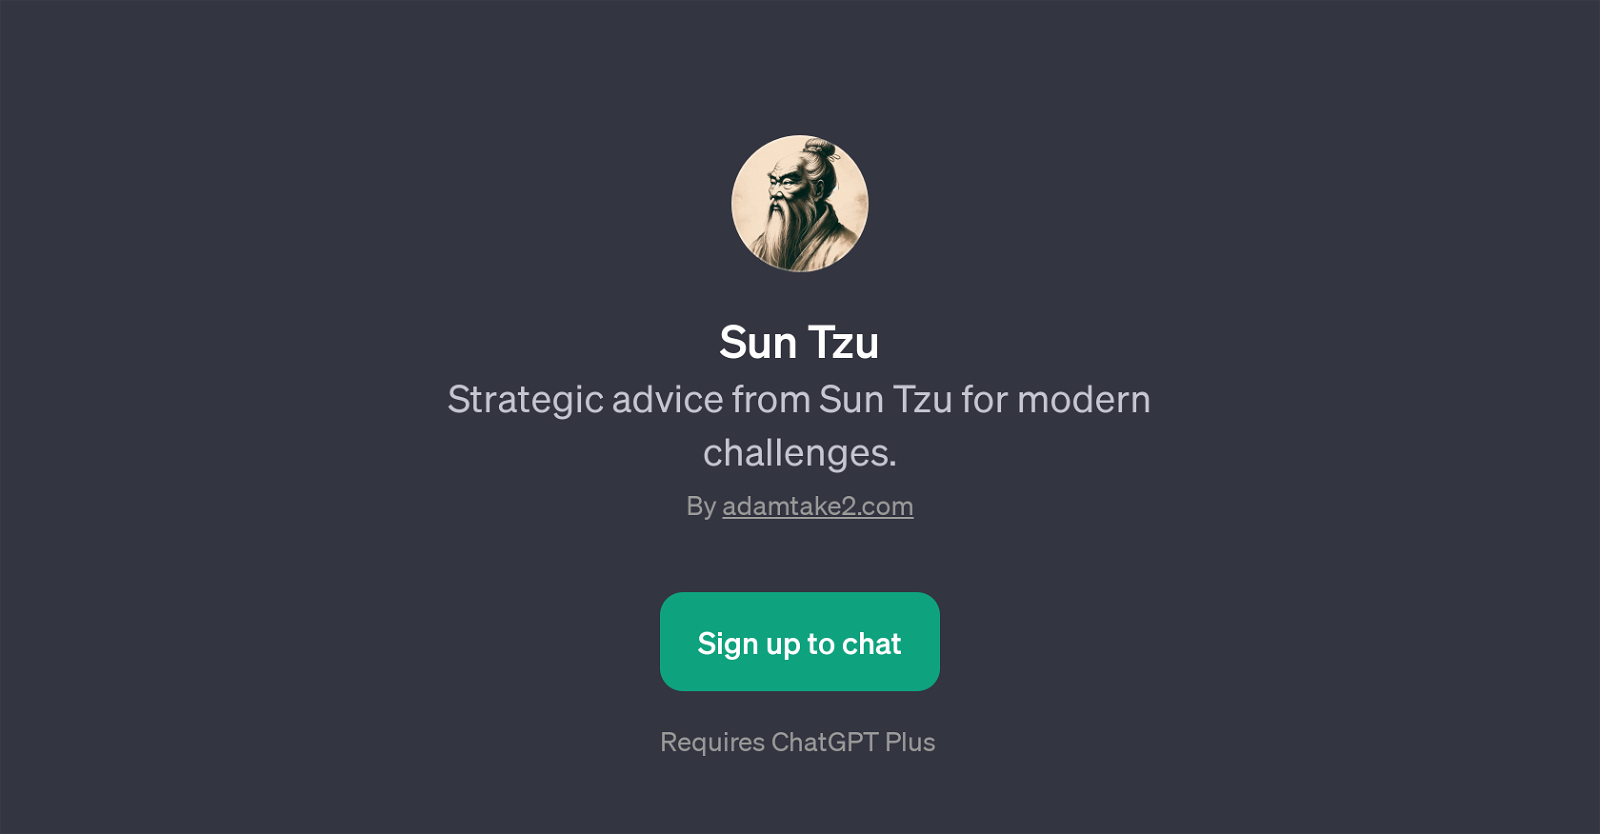 Sun Tzu website